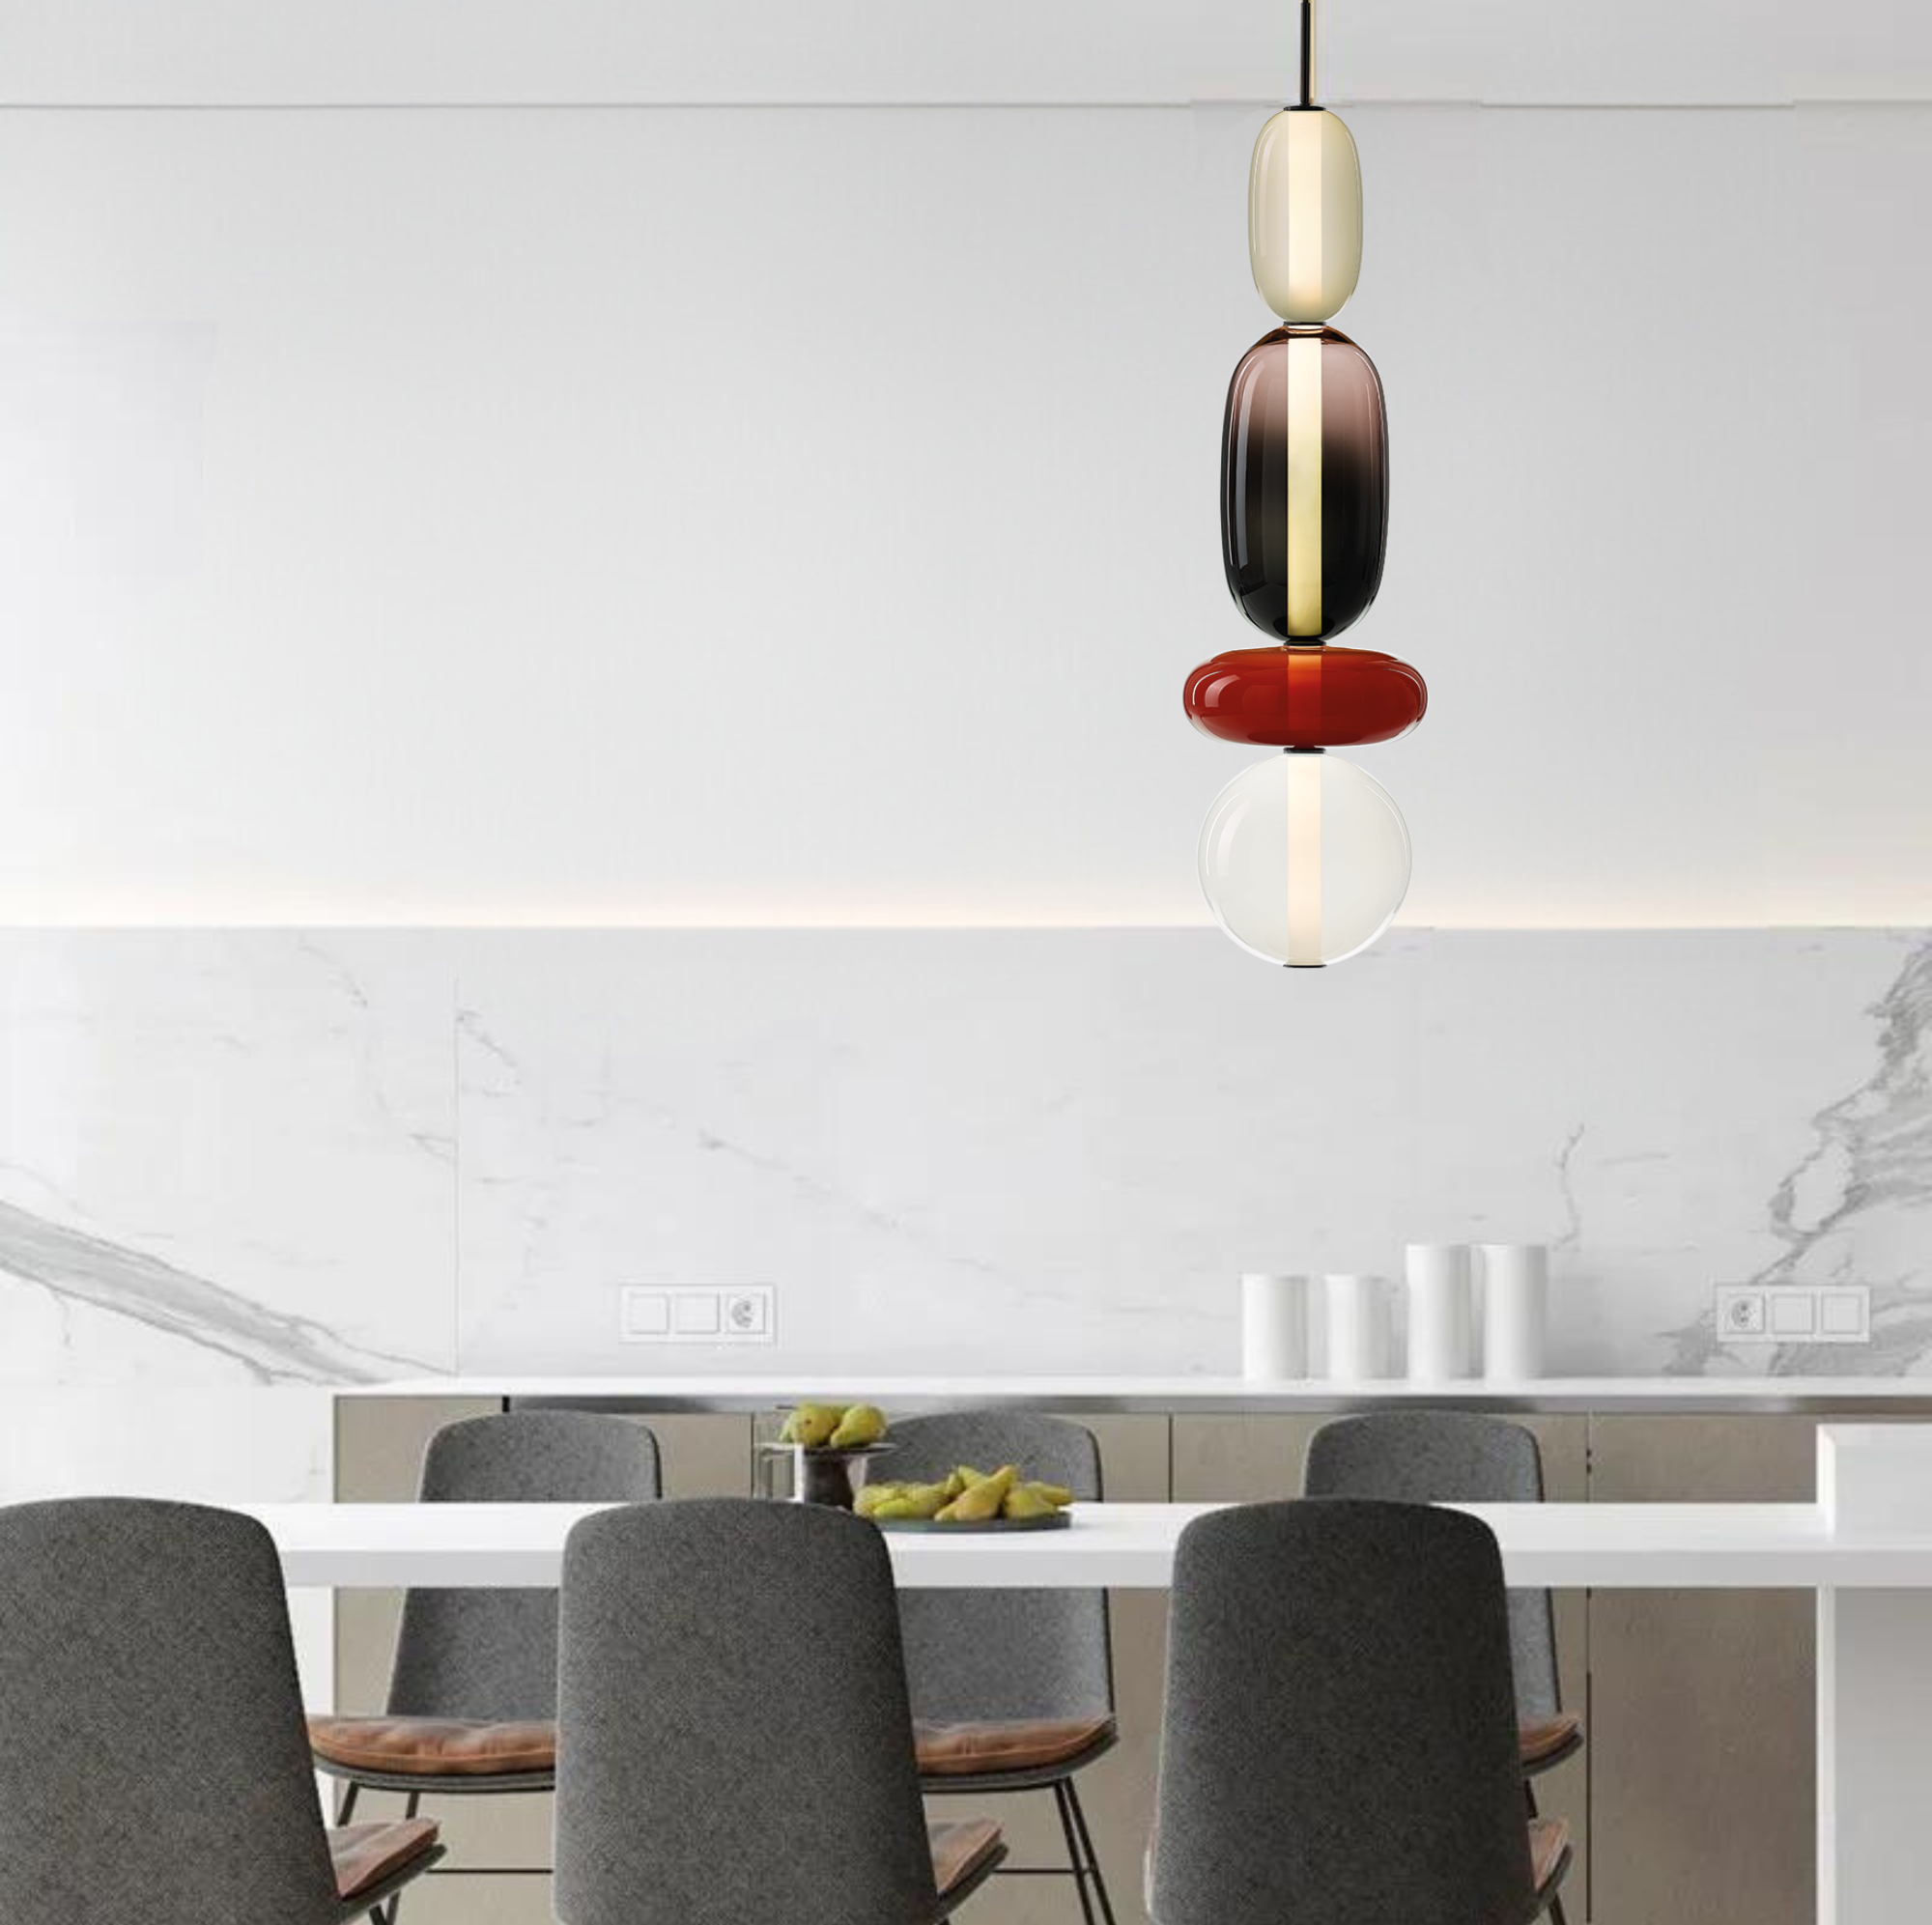 MD3202-C Luxury Unique Design Red Black Color Glass LED pendant Light Fixture Indoor Glass Decorative Light Fixture for Loft Restaurant, Bar, Cafe, Restaurant (Single Piece)